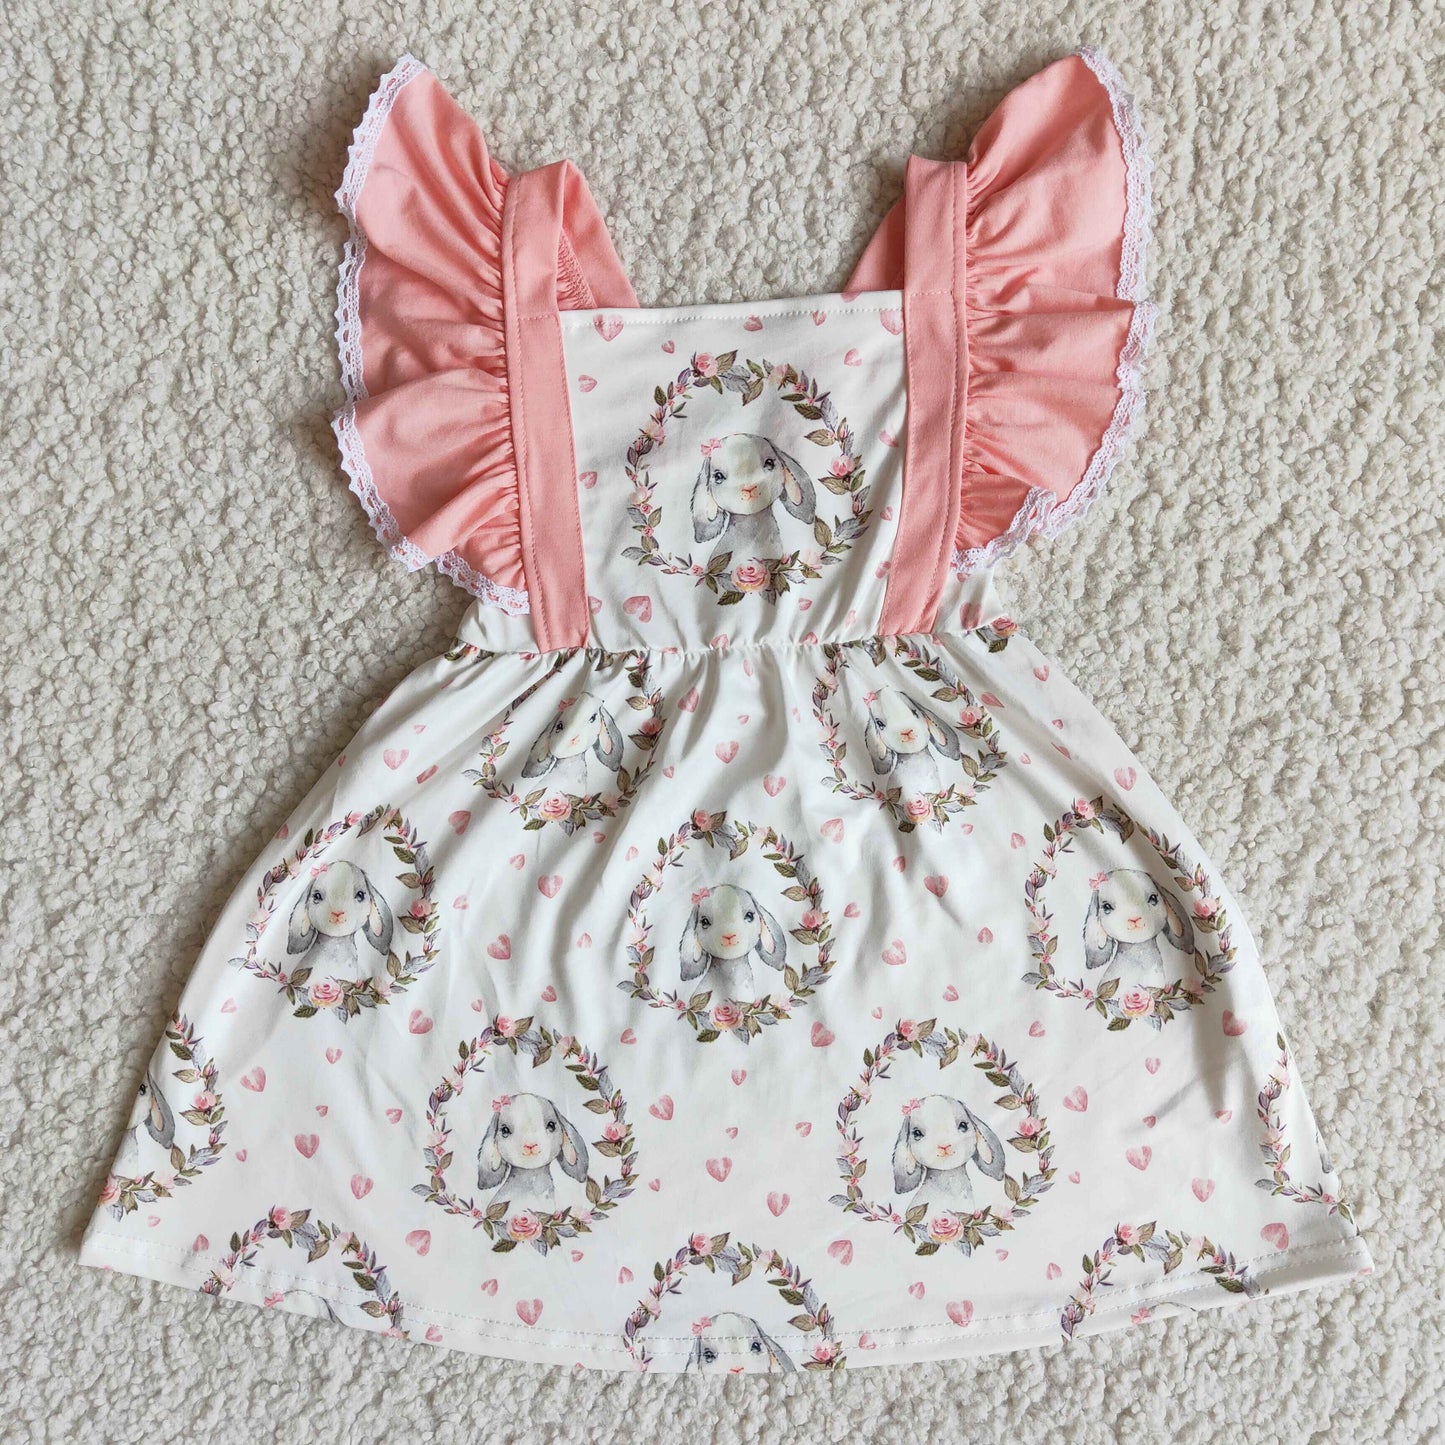 cute sleeveless pink white easter dress for baby girl kids clothing